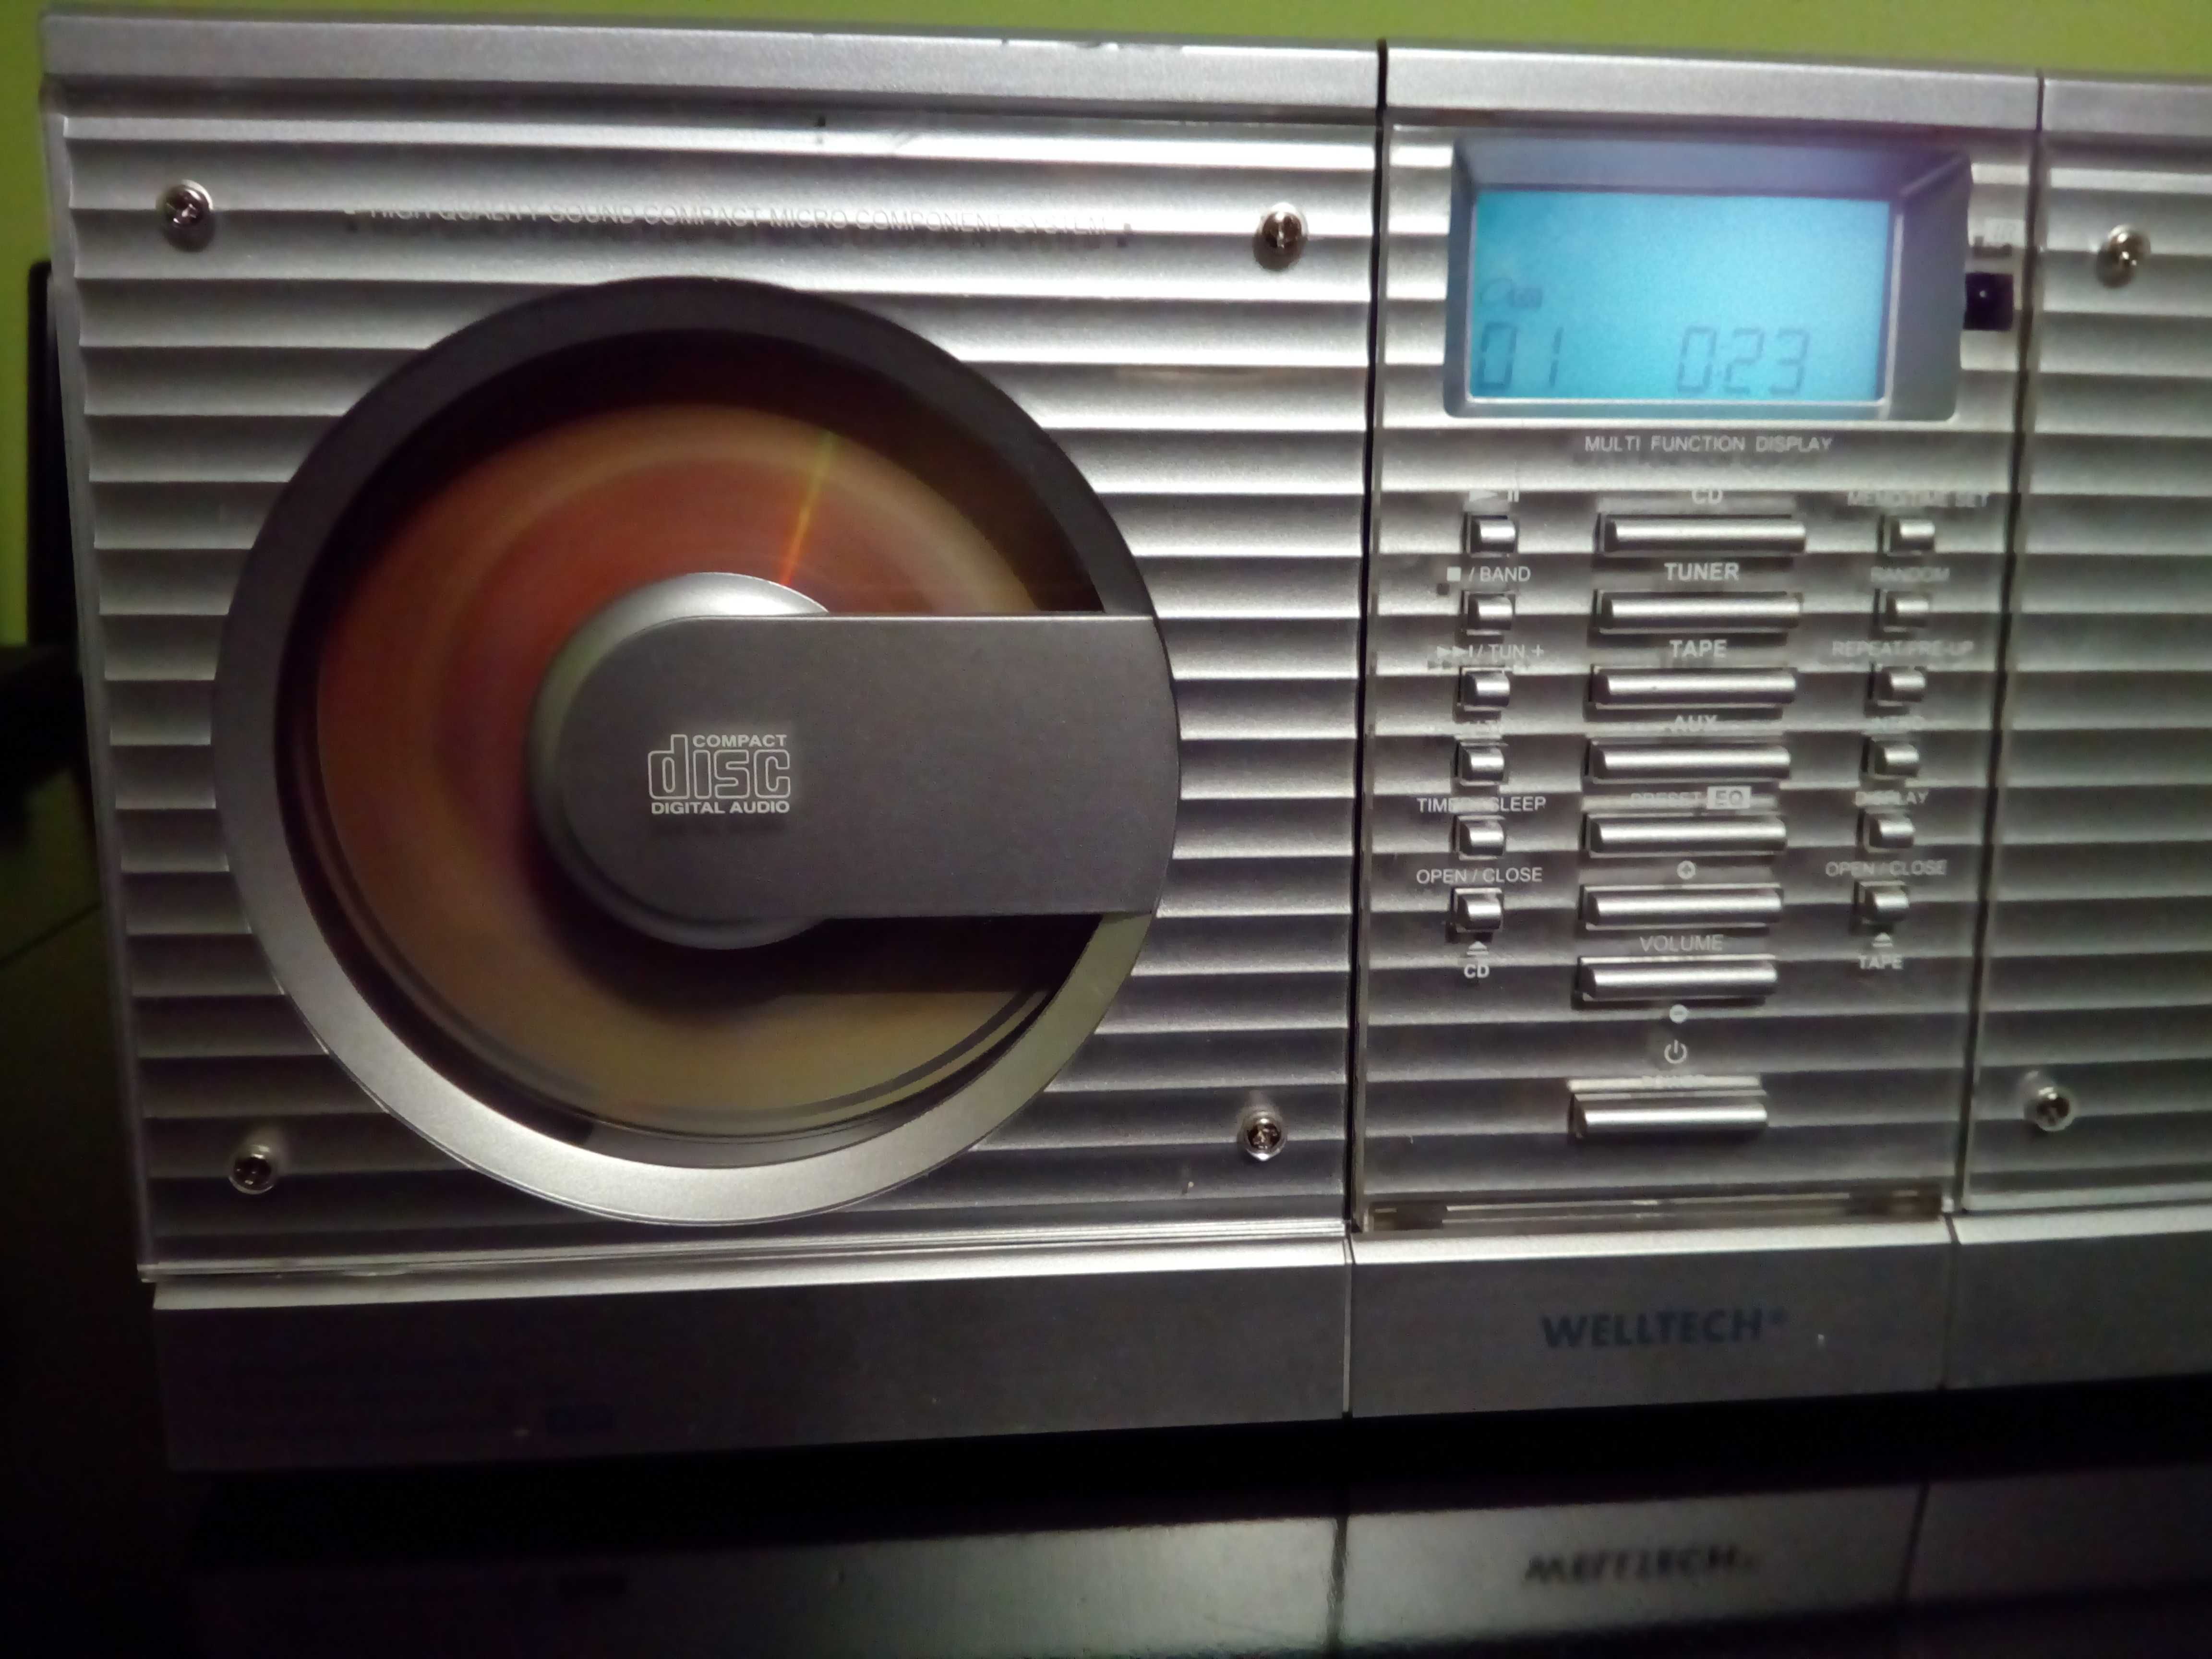 Wzmacniacz radio cd tape tuner magnetofon radiomagnetofon aux